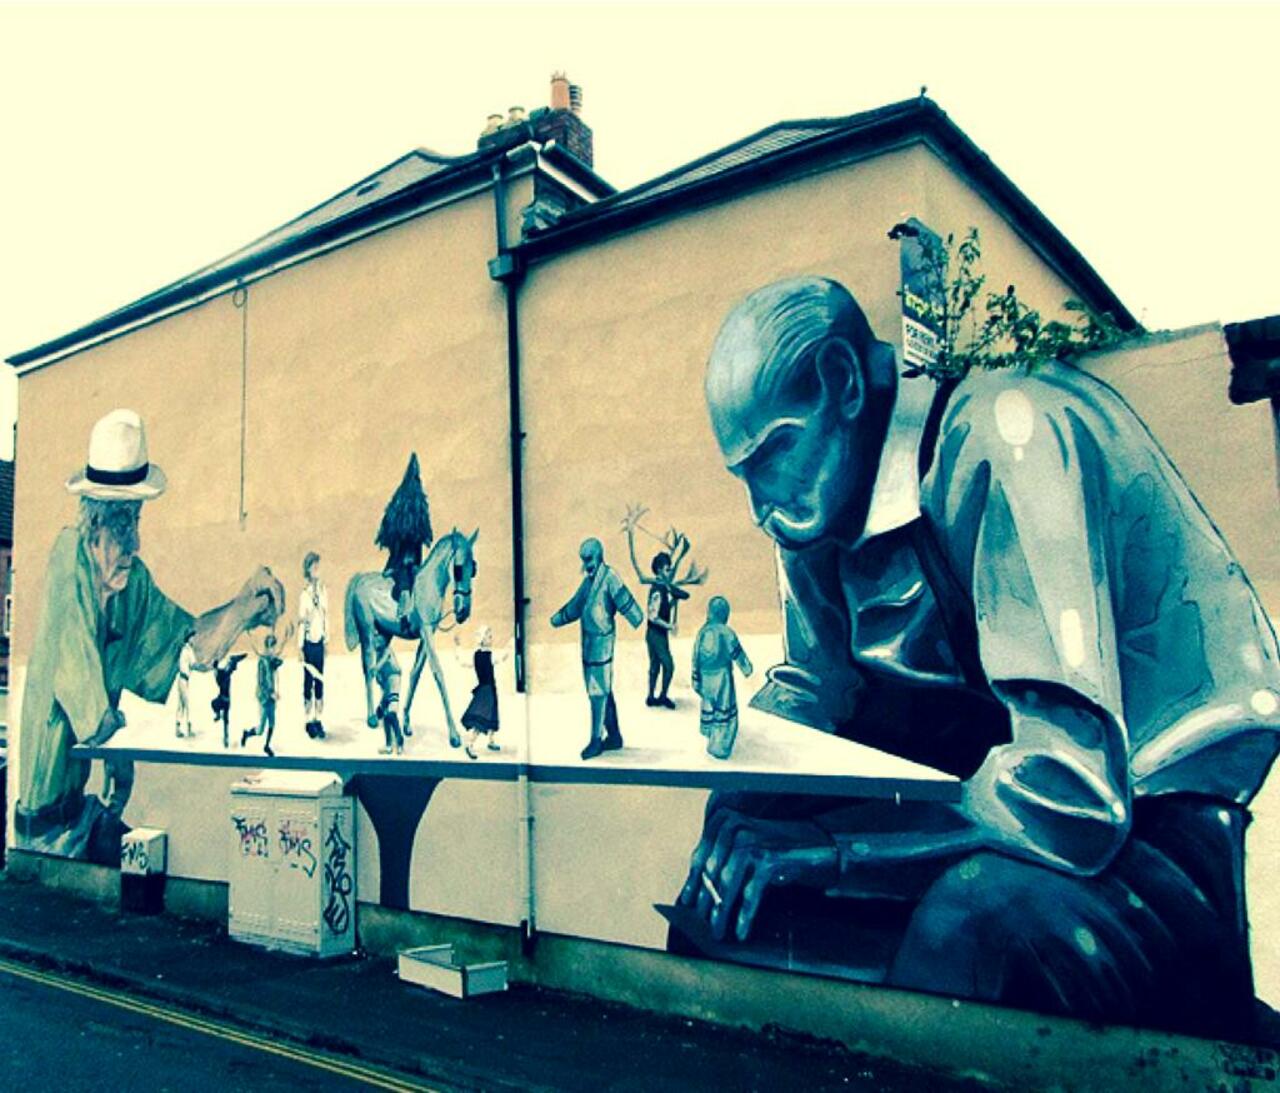 RT @mSale_: *sigh. RT @streetcnina: #graffiti #mural #murales #urbanart #streetart http://t.co/PKeKAVtdyK